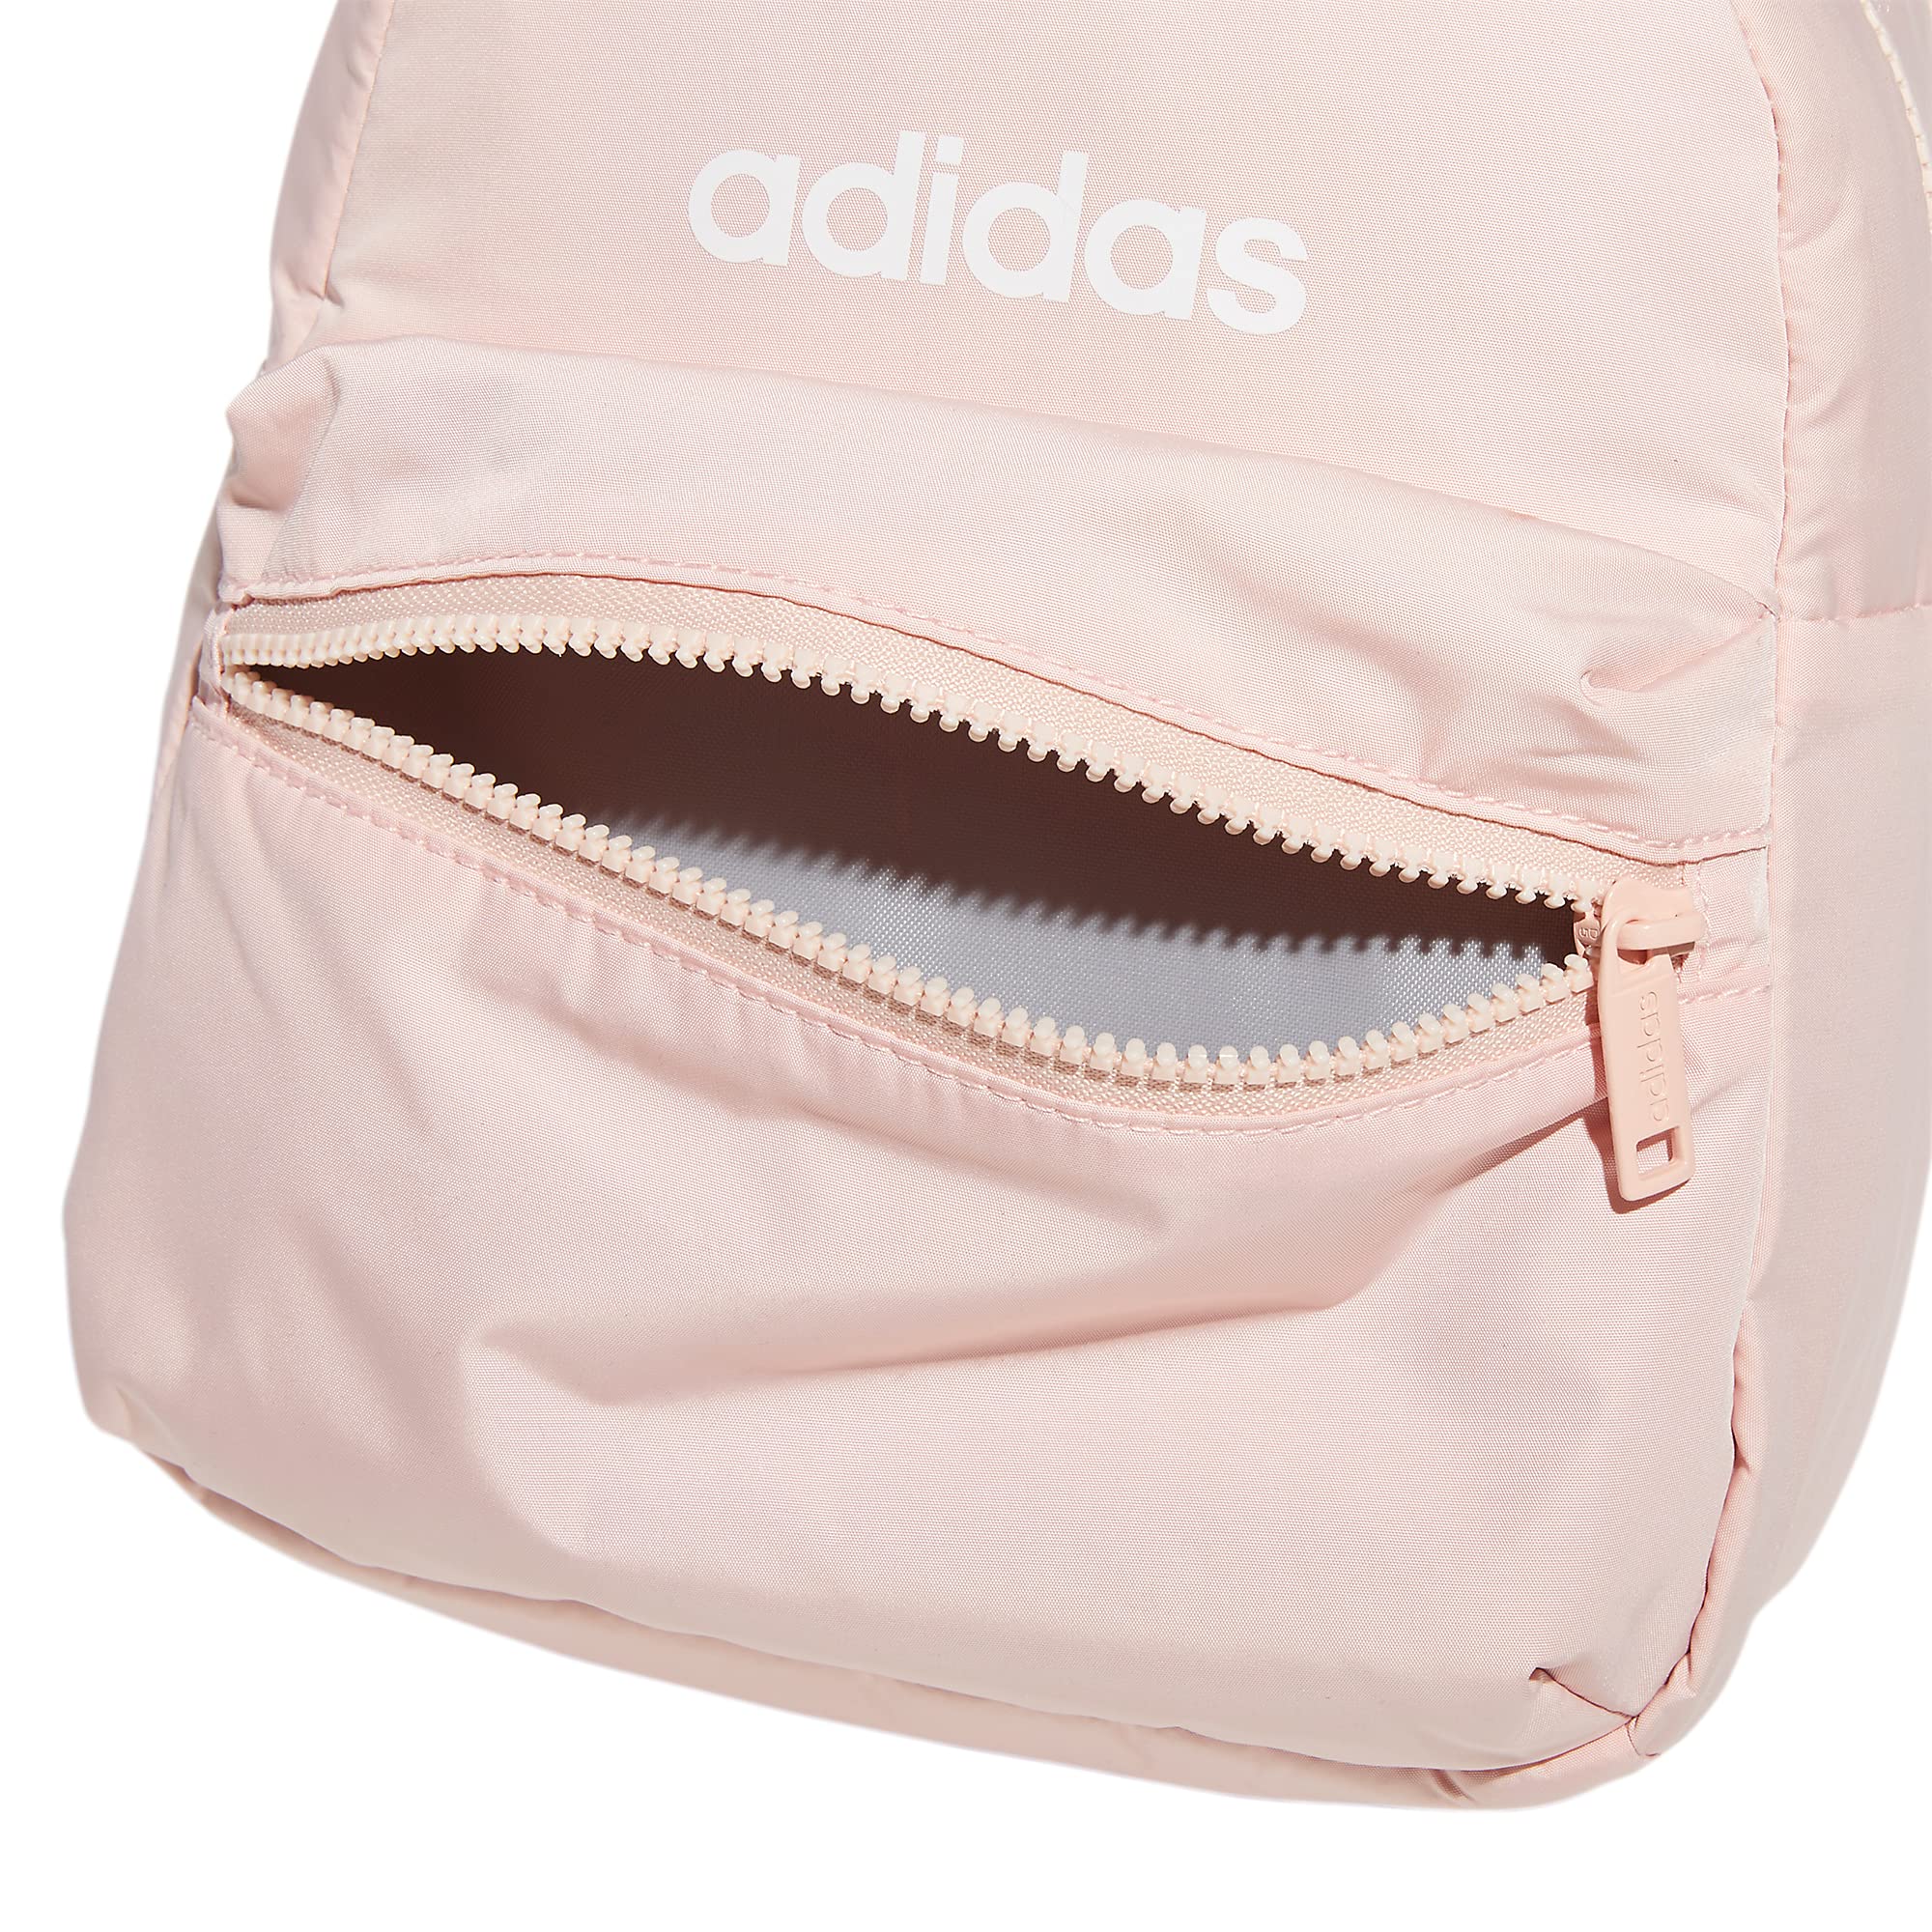 T60 Imported Duffle Bag | Sports Bag | Gym Bag | Travel Bag